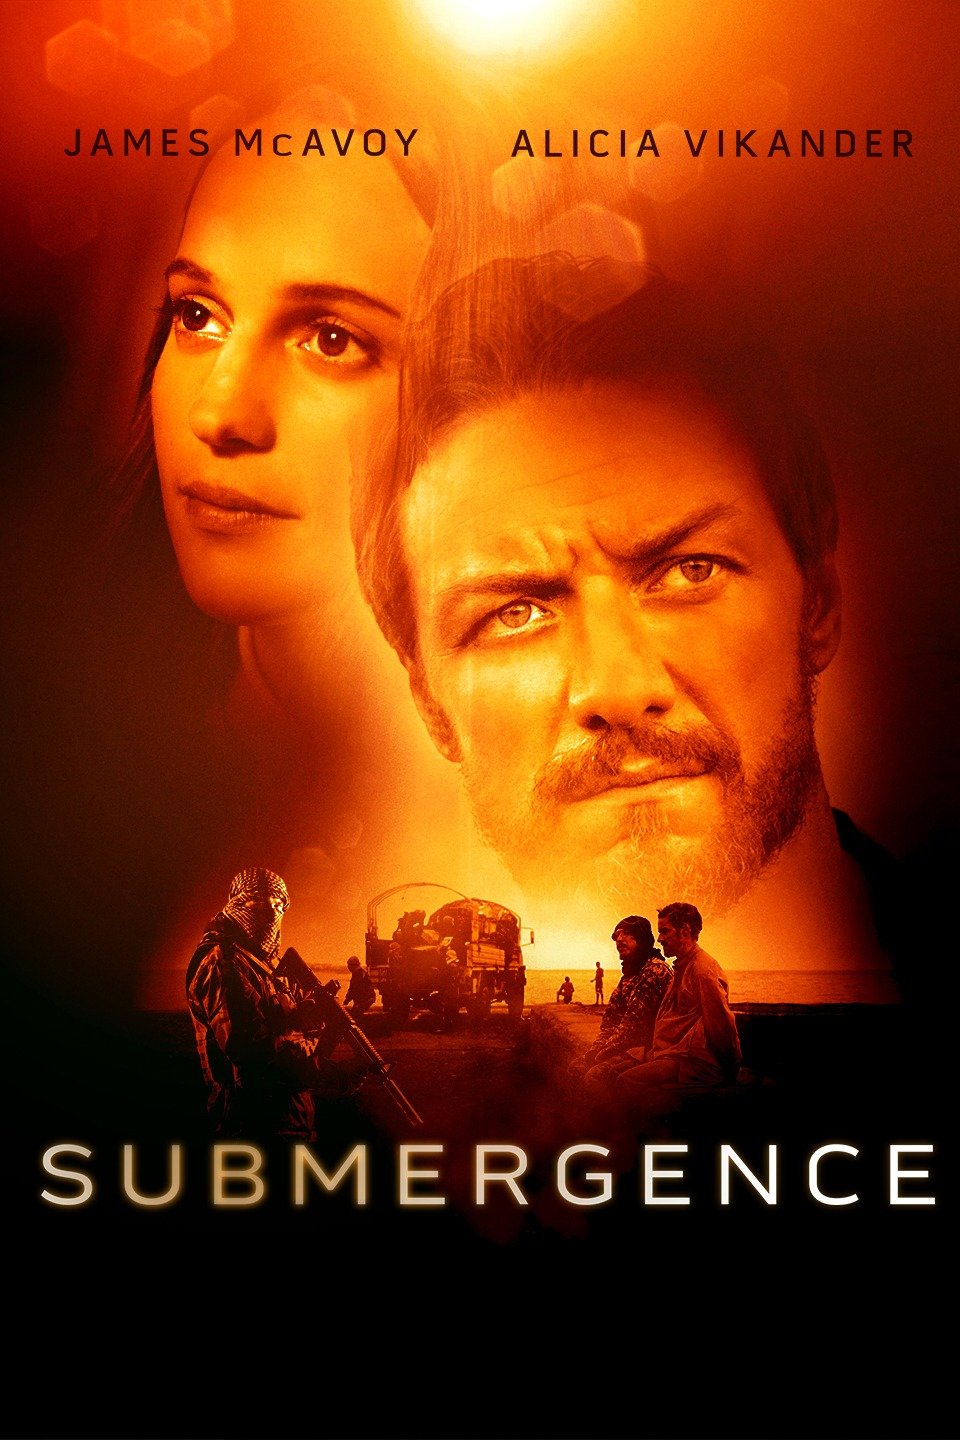 [MINI Super-HQ] Submergence (2017) ห้วงลึกพิสูจน์รัก [1080p] [พากย์ไทย 5.1 + เสียงอังกฤษ DTS] [บรรยายไทย + อังกฤษ] [เสียงไทย + ซับไทย]